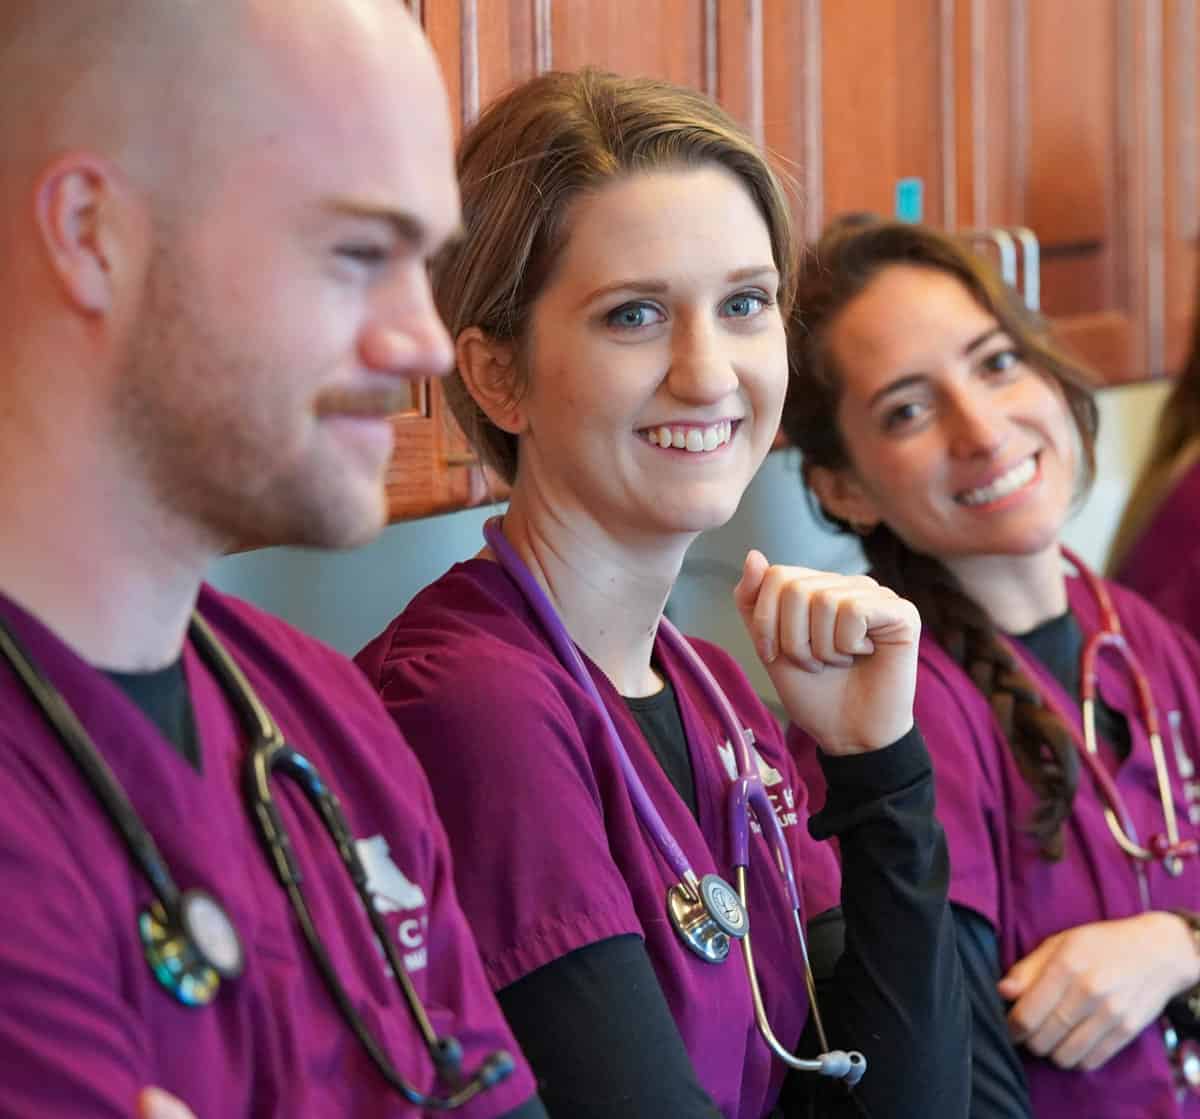 Practical Nursing students smiling